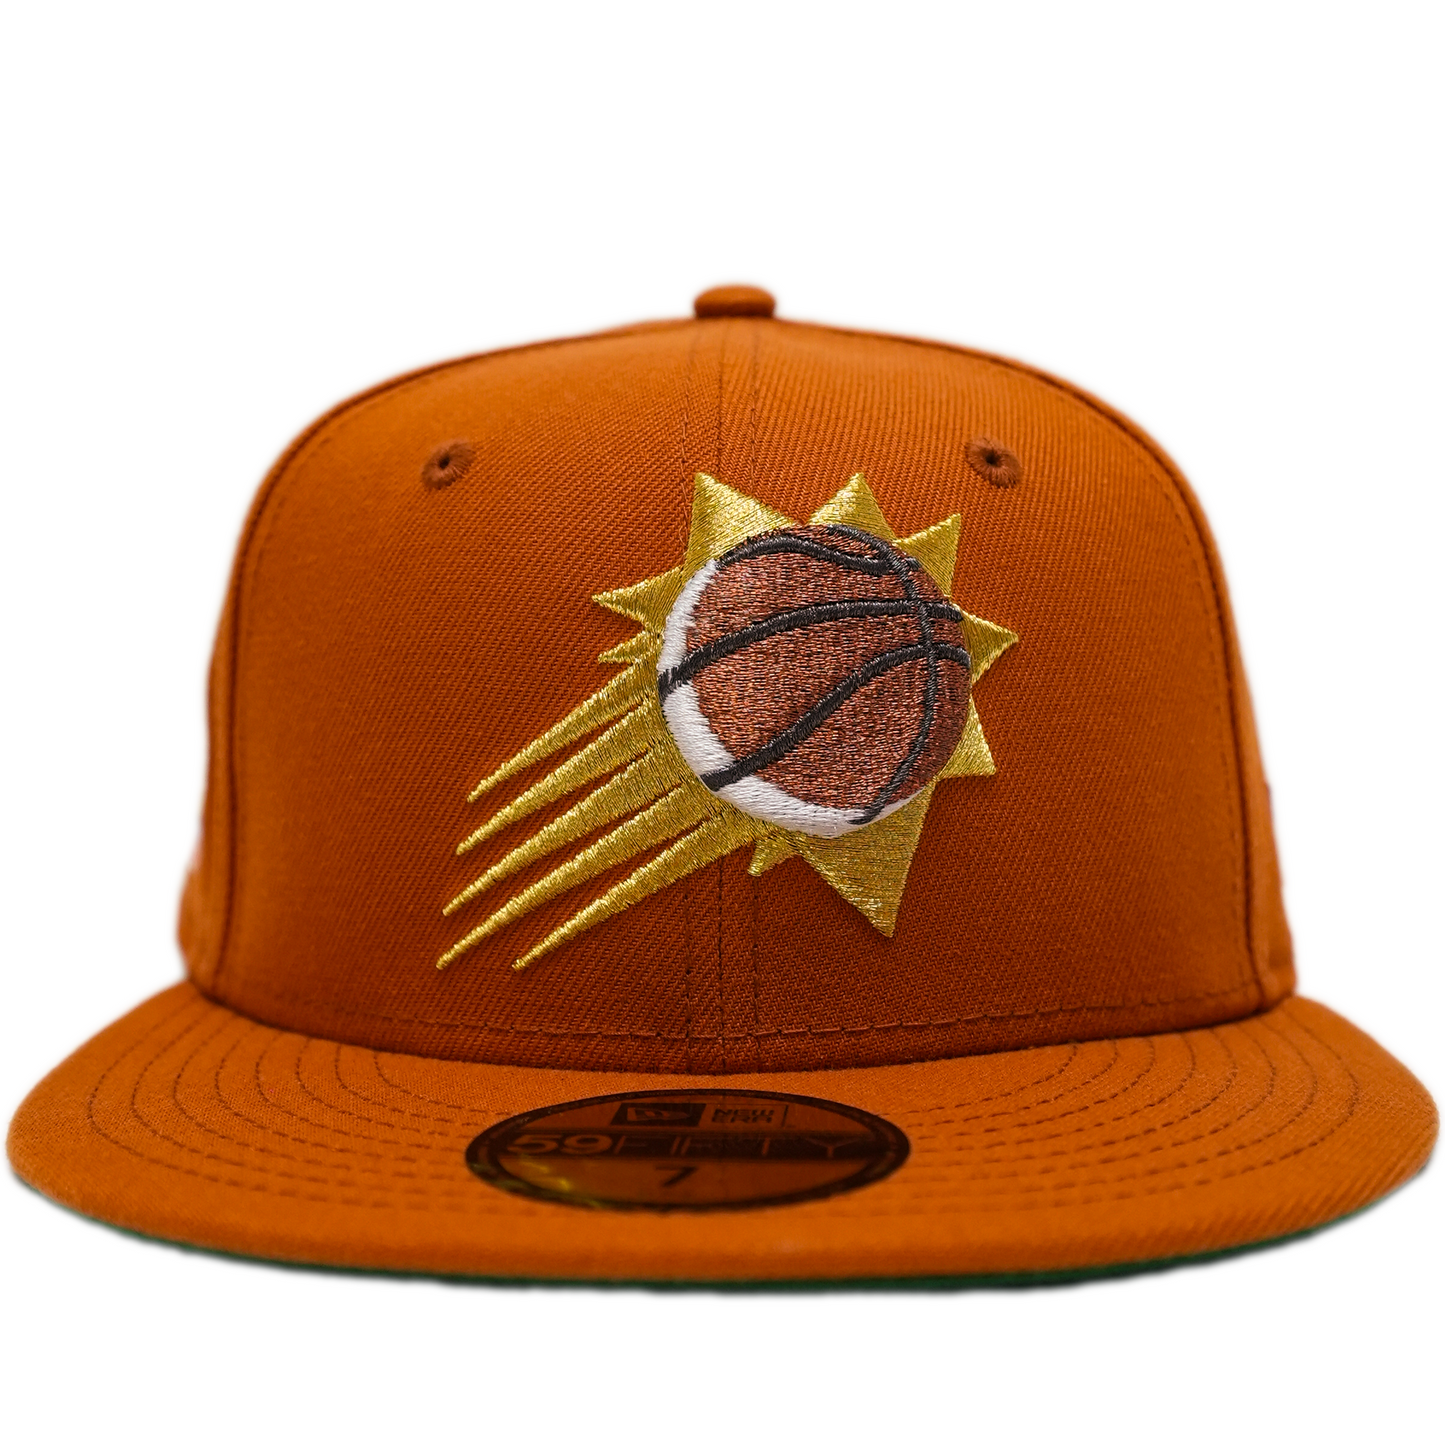 New Era Phoenix Suns 59Fifty Fitted Hat - Orange